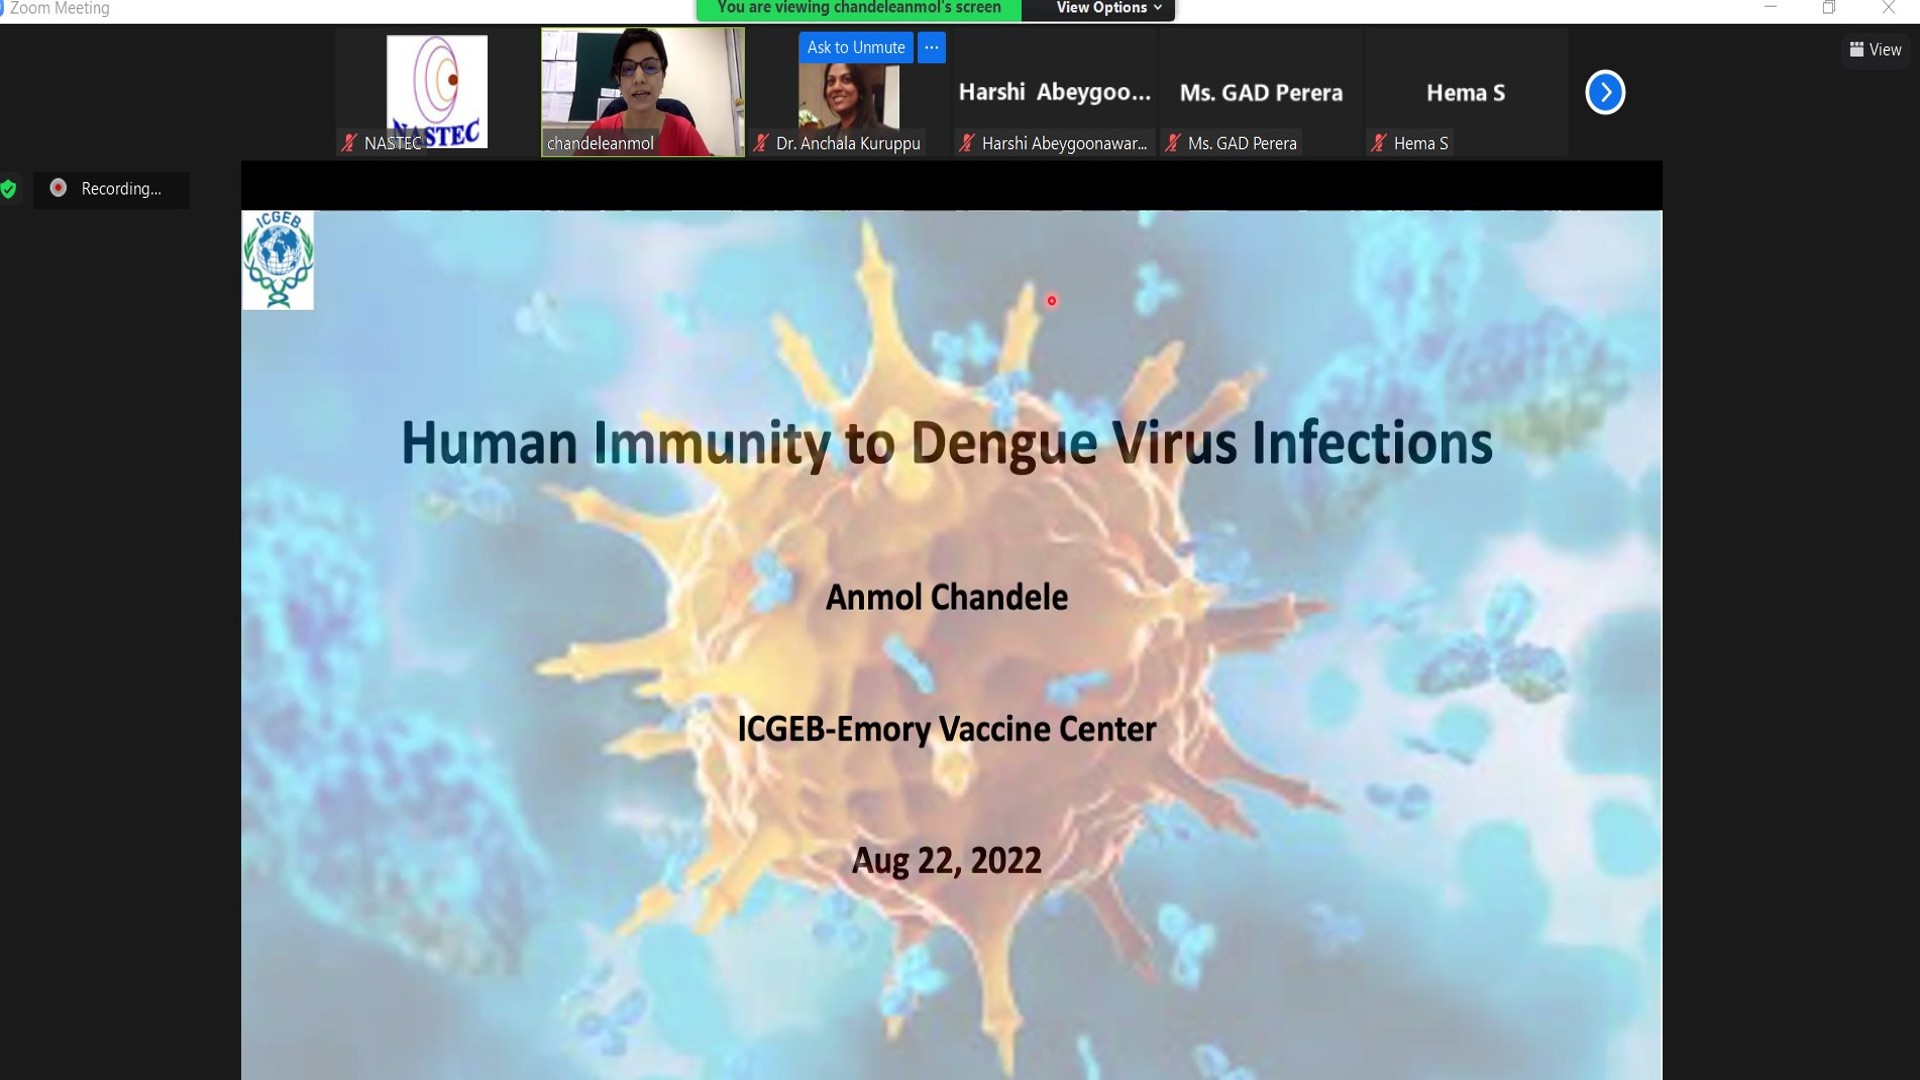 YSF Webinar on Human Immunity to Dengue Virus Infections